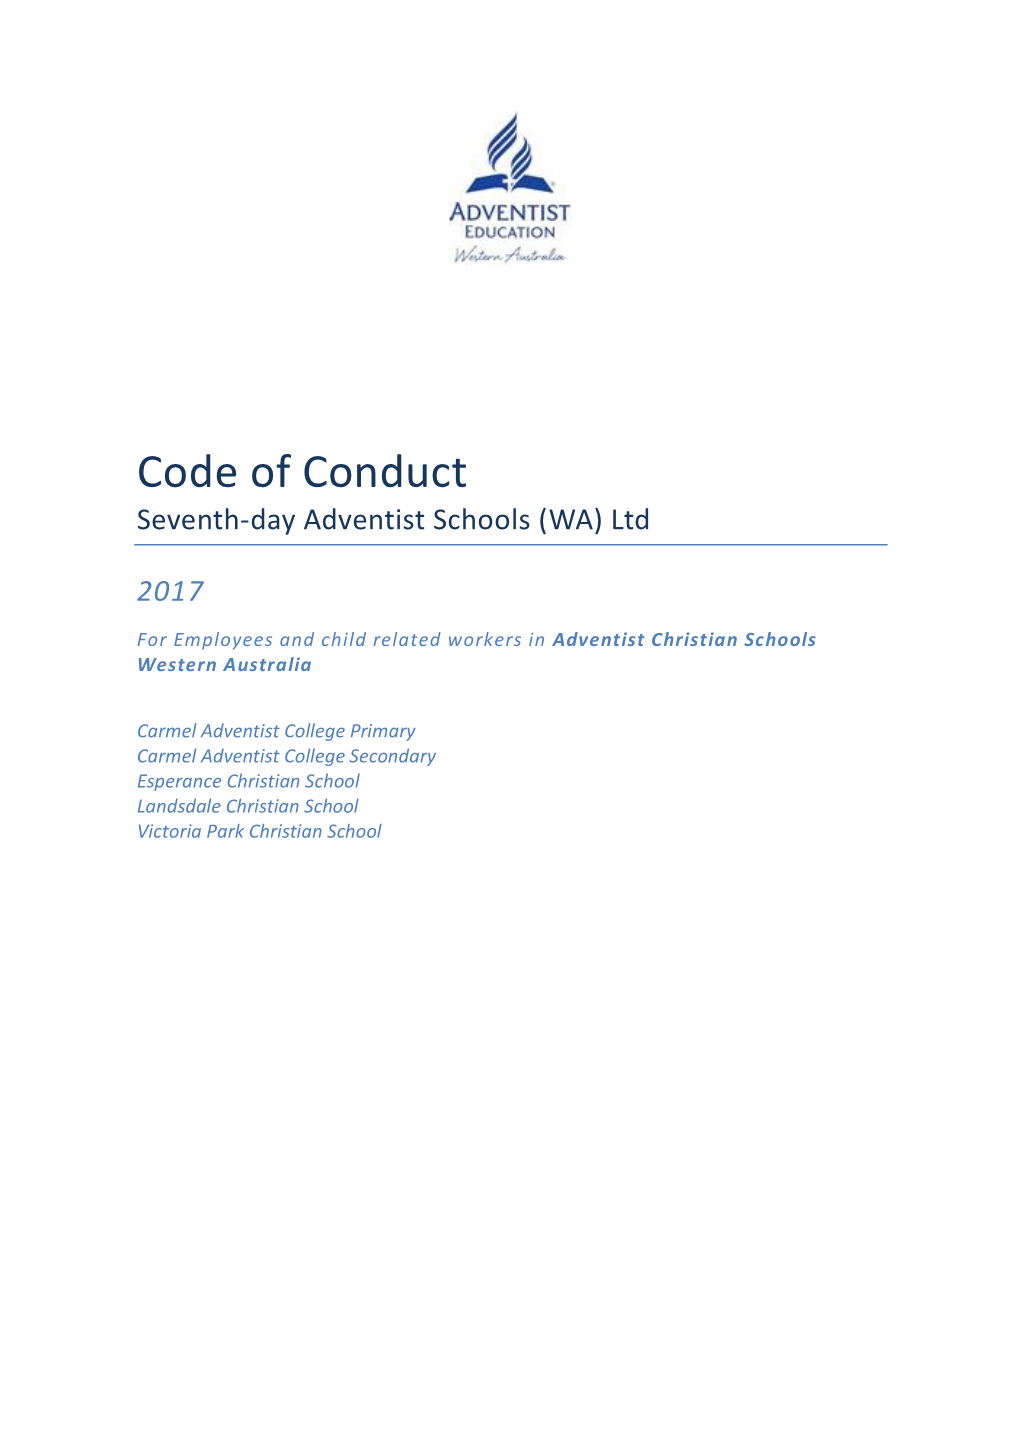 Code of Conduct Seventh-Day Adventist Schools (WA) Ltd